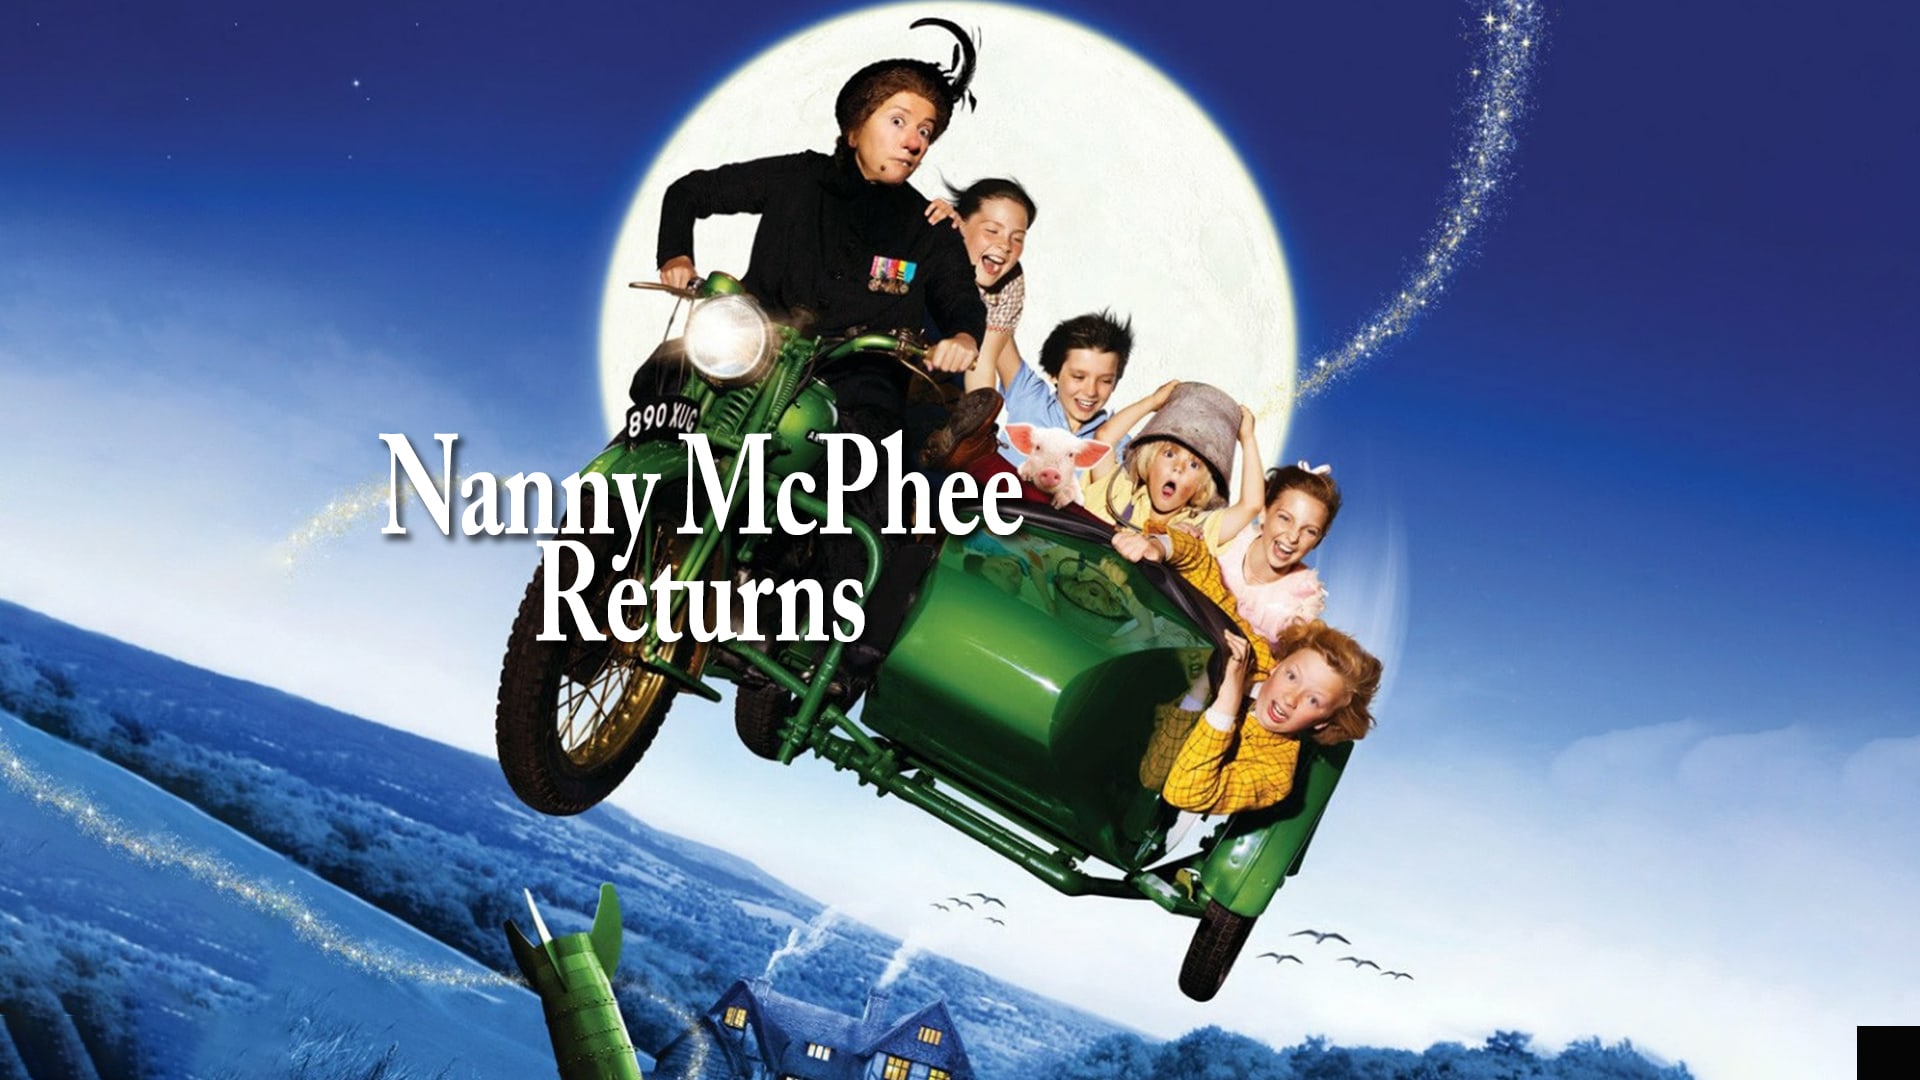 Watch Nanny McPhee Returns Online | Stream Full Movies